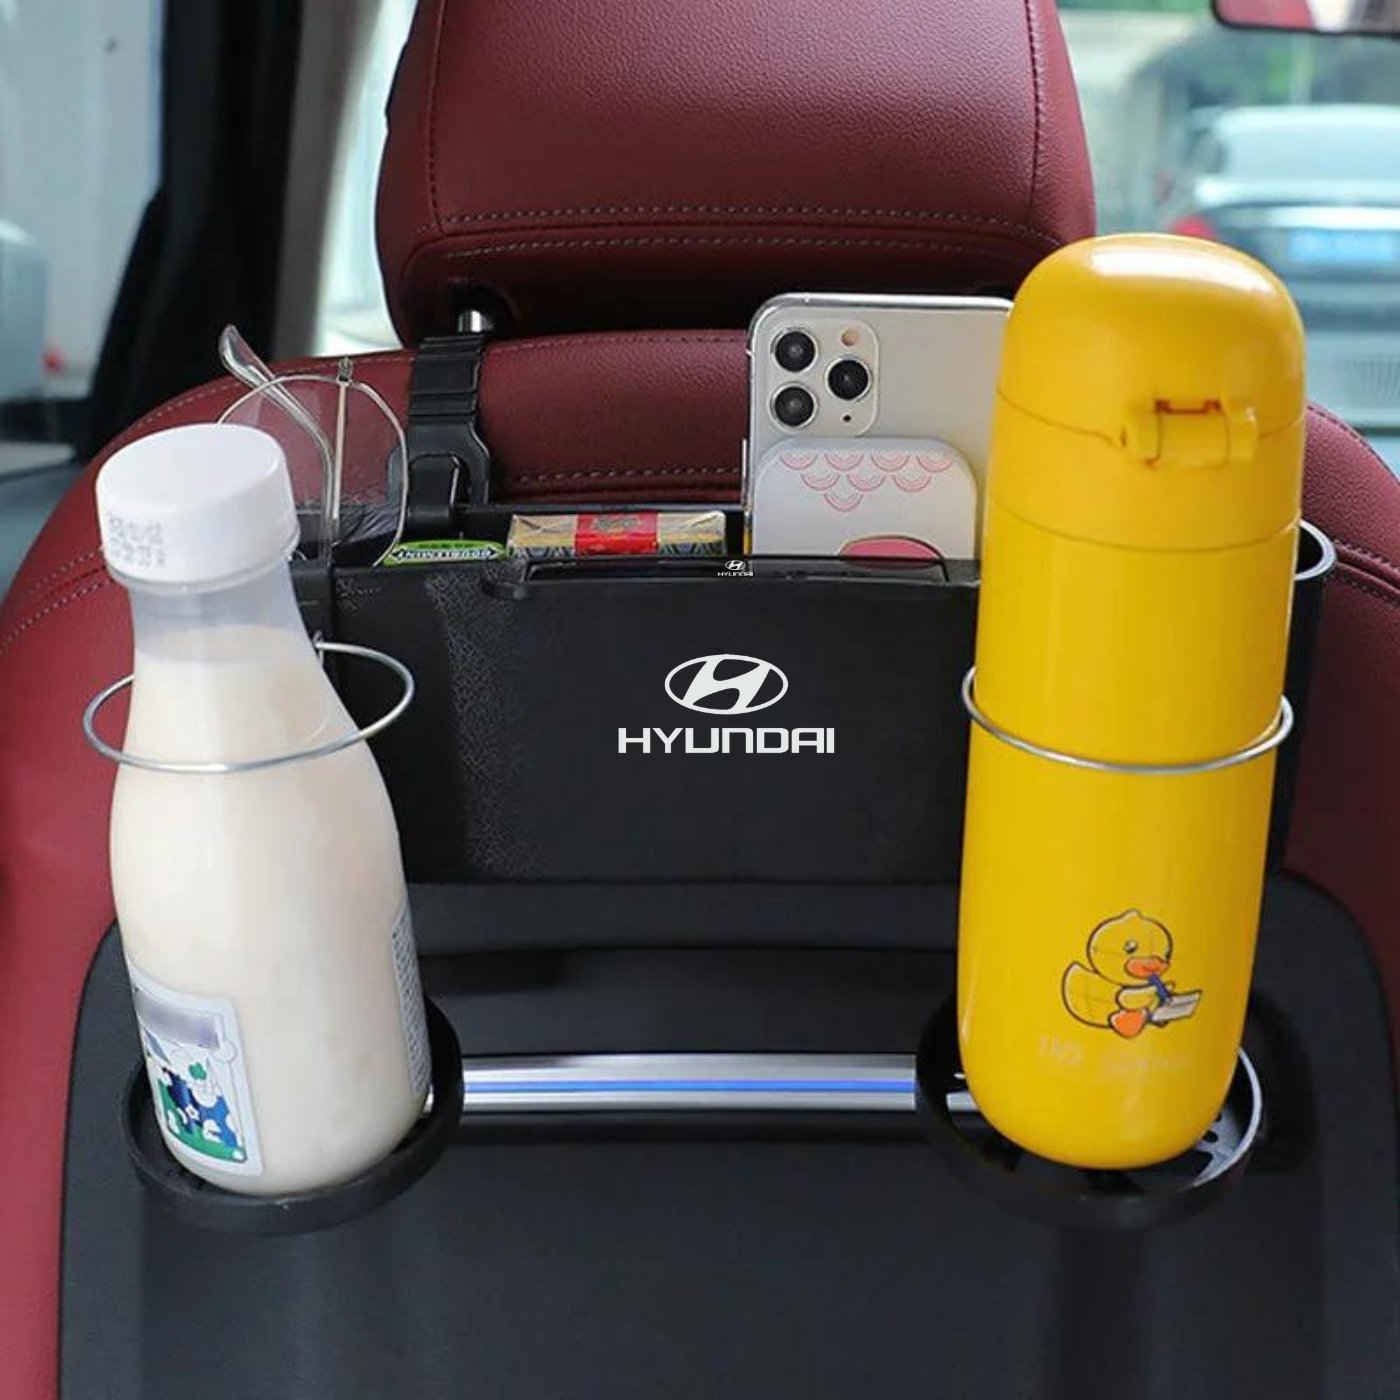 Car Multifunctional Storage Box - Home Essentials Store Retail